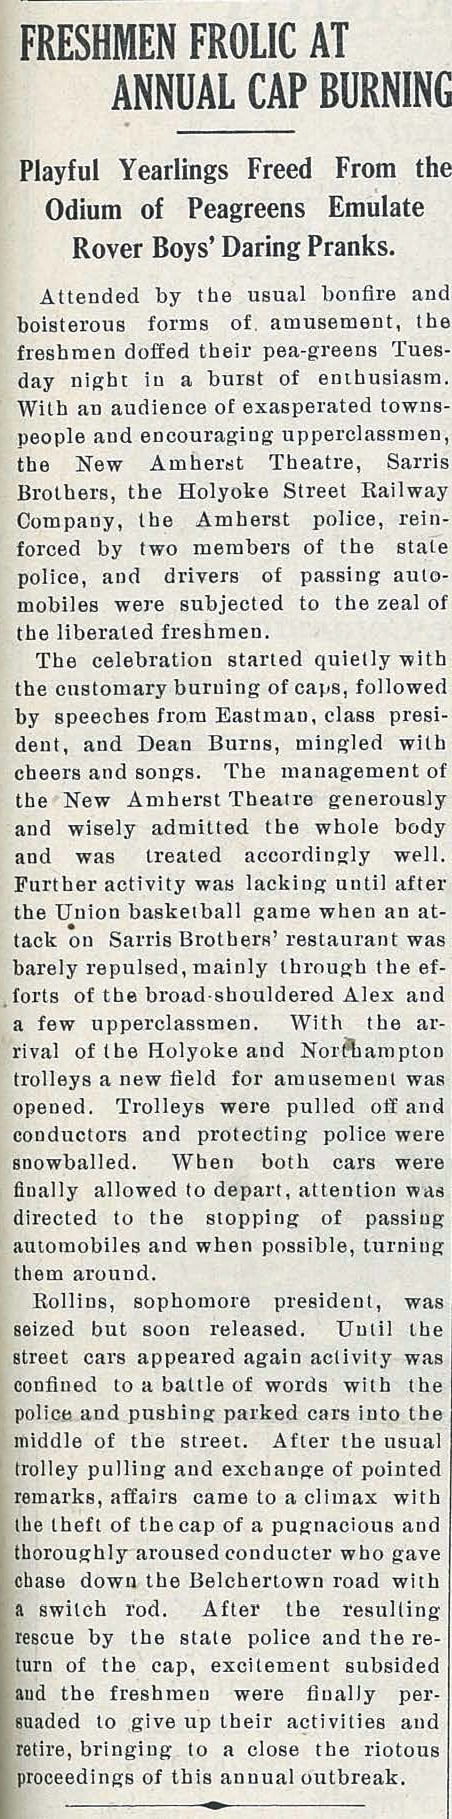 Amherst Student, Feb. 24, 1927